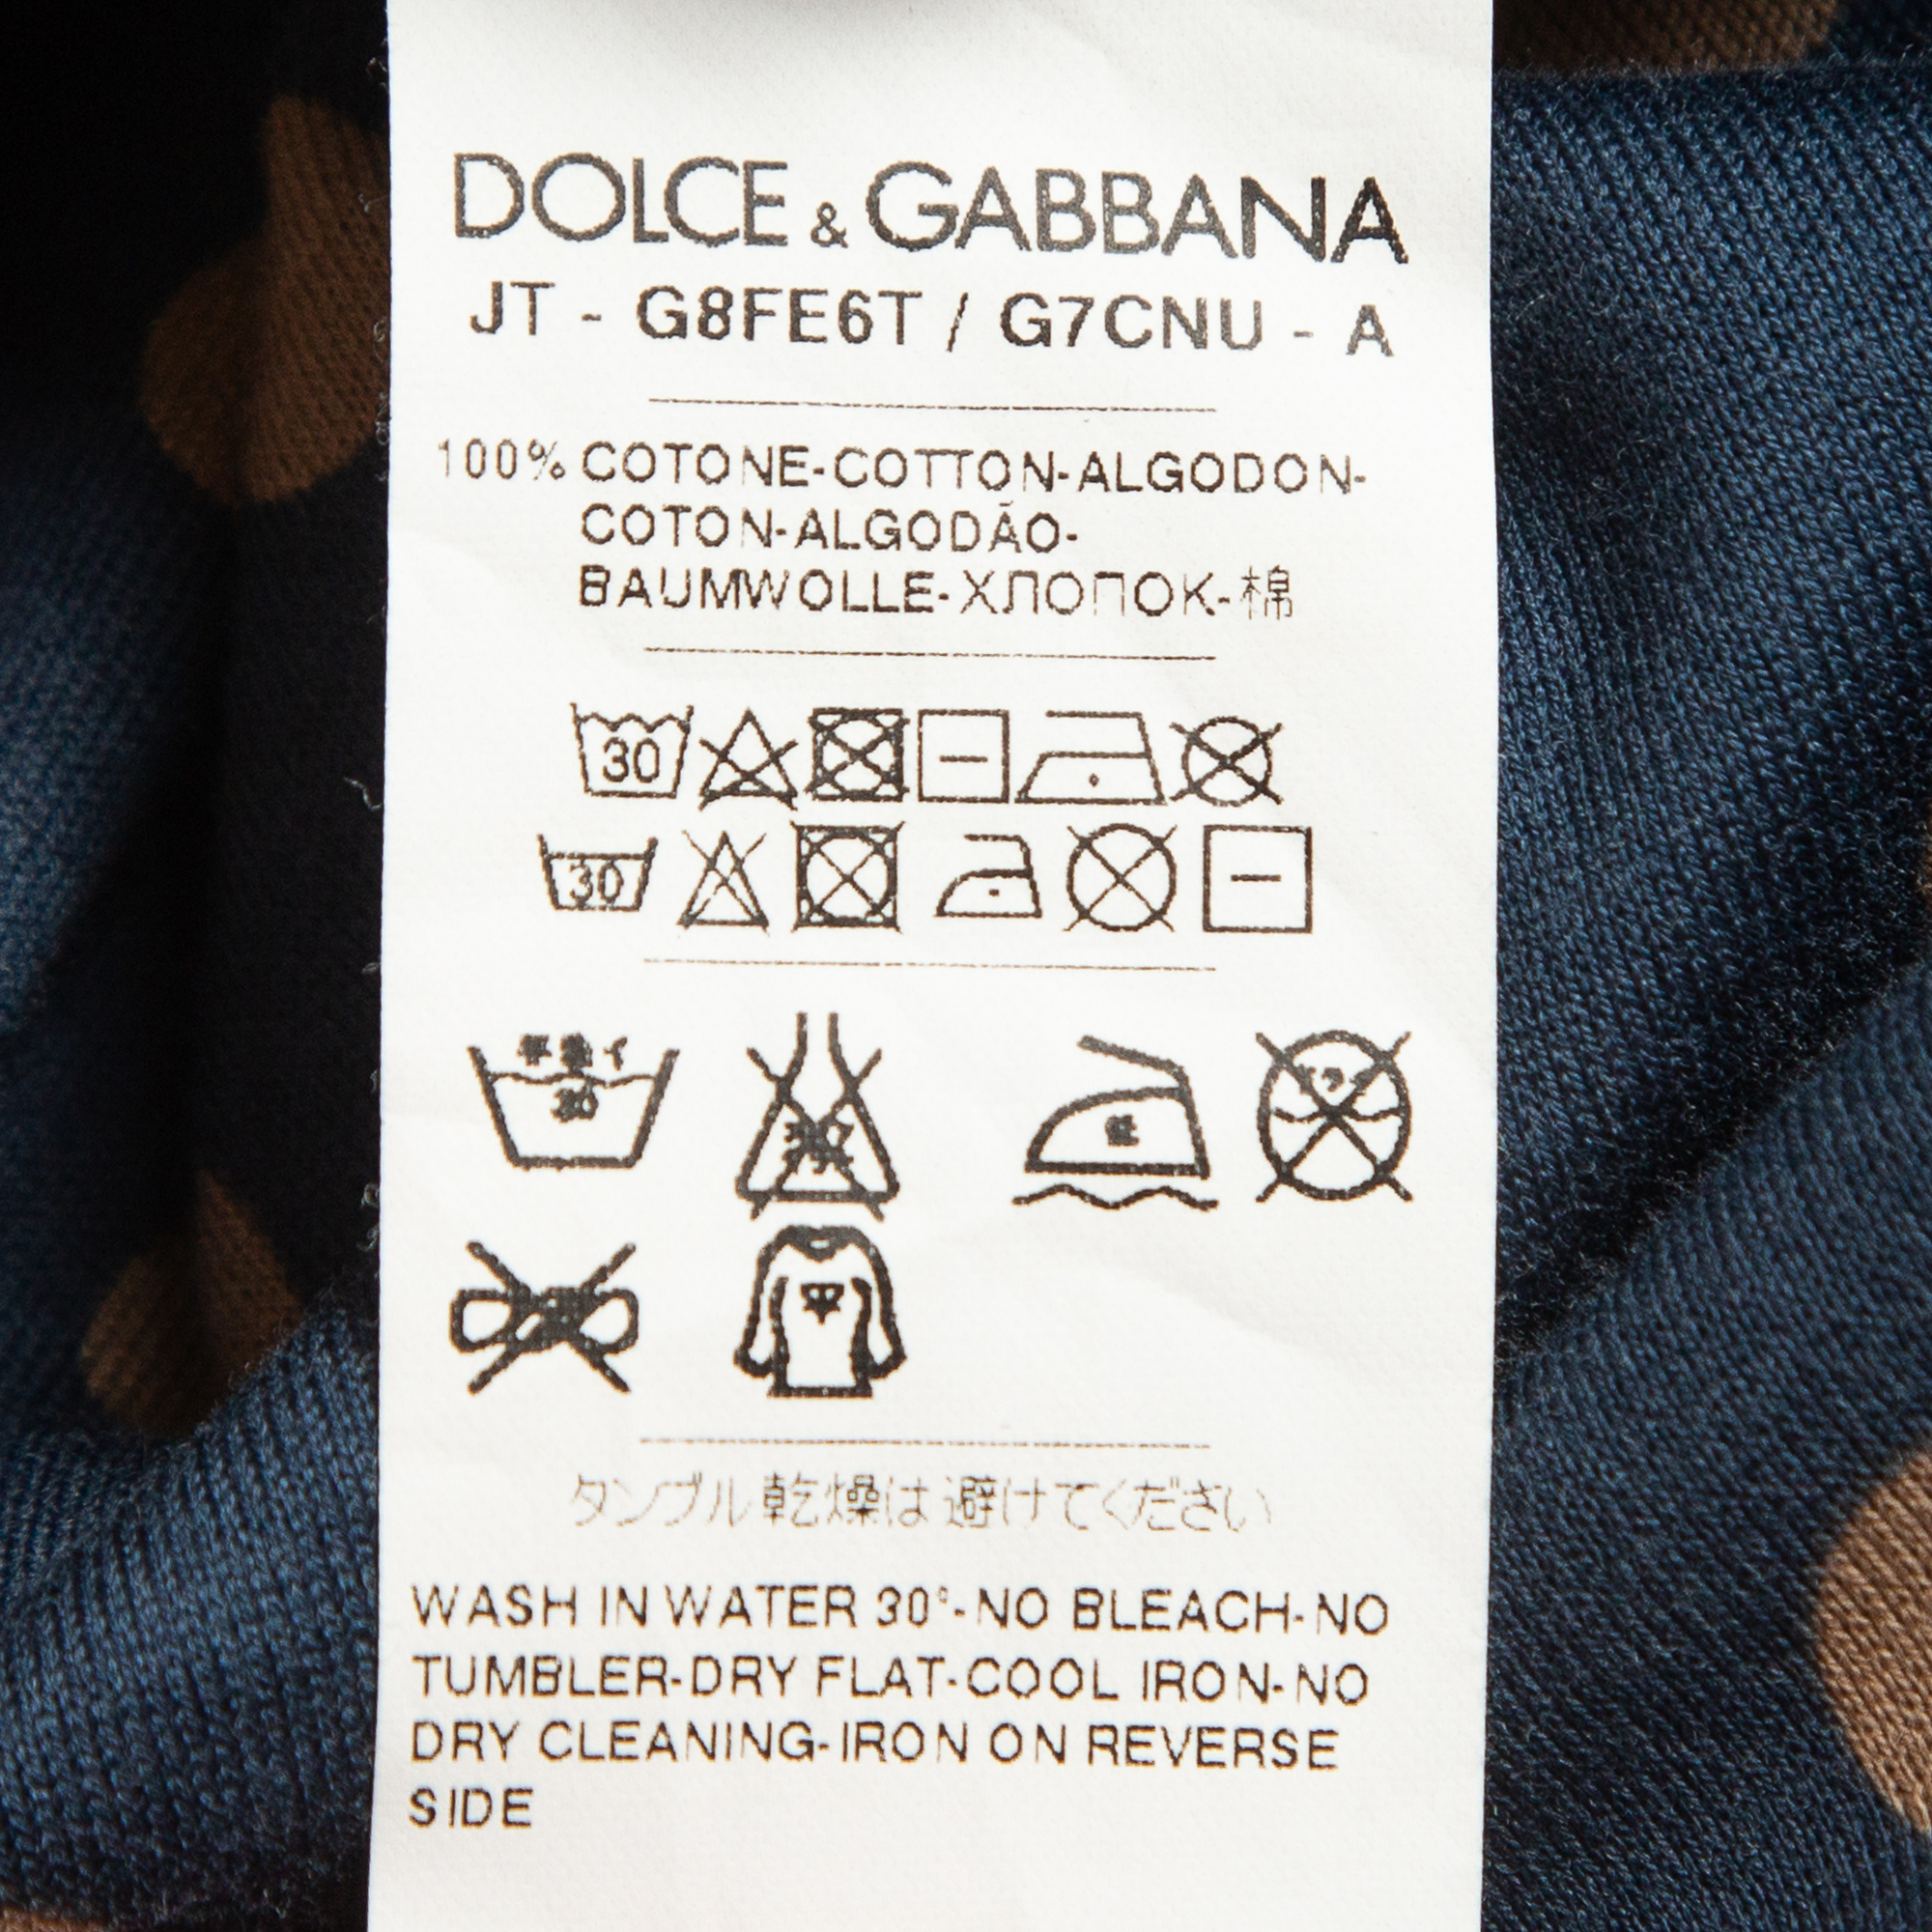 Dolce & Gabbana Blue Dotted Cotton Half Sleeve T-Shirt L